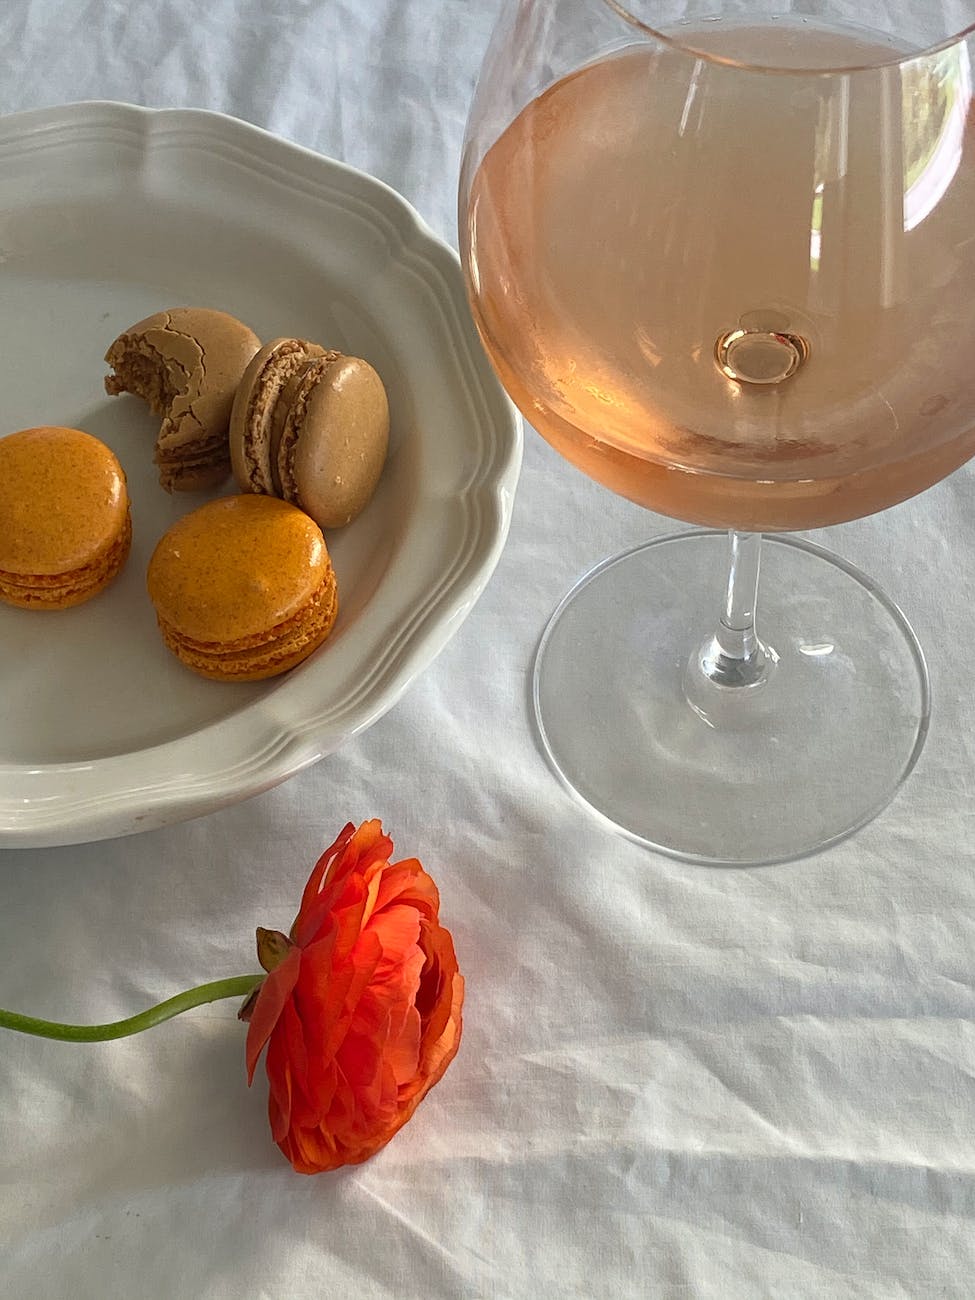 glass of rose wine placed near sweet macaron